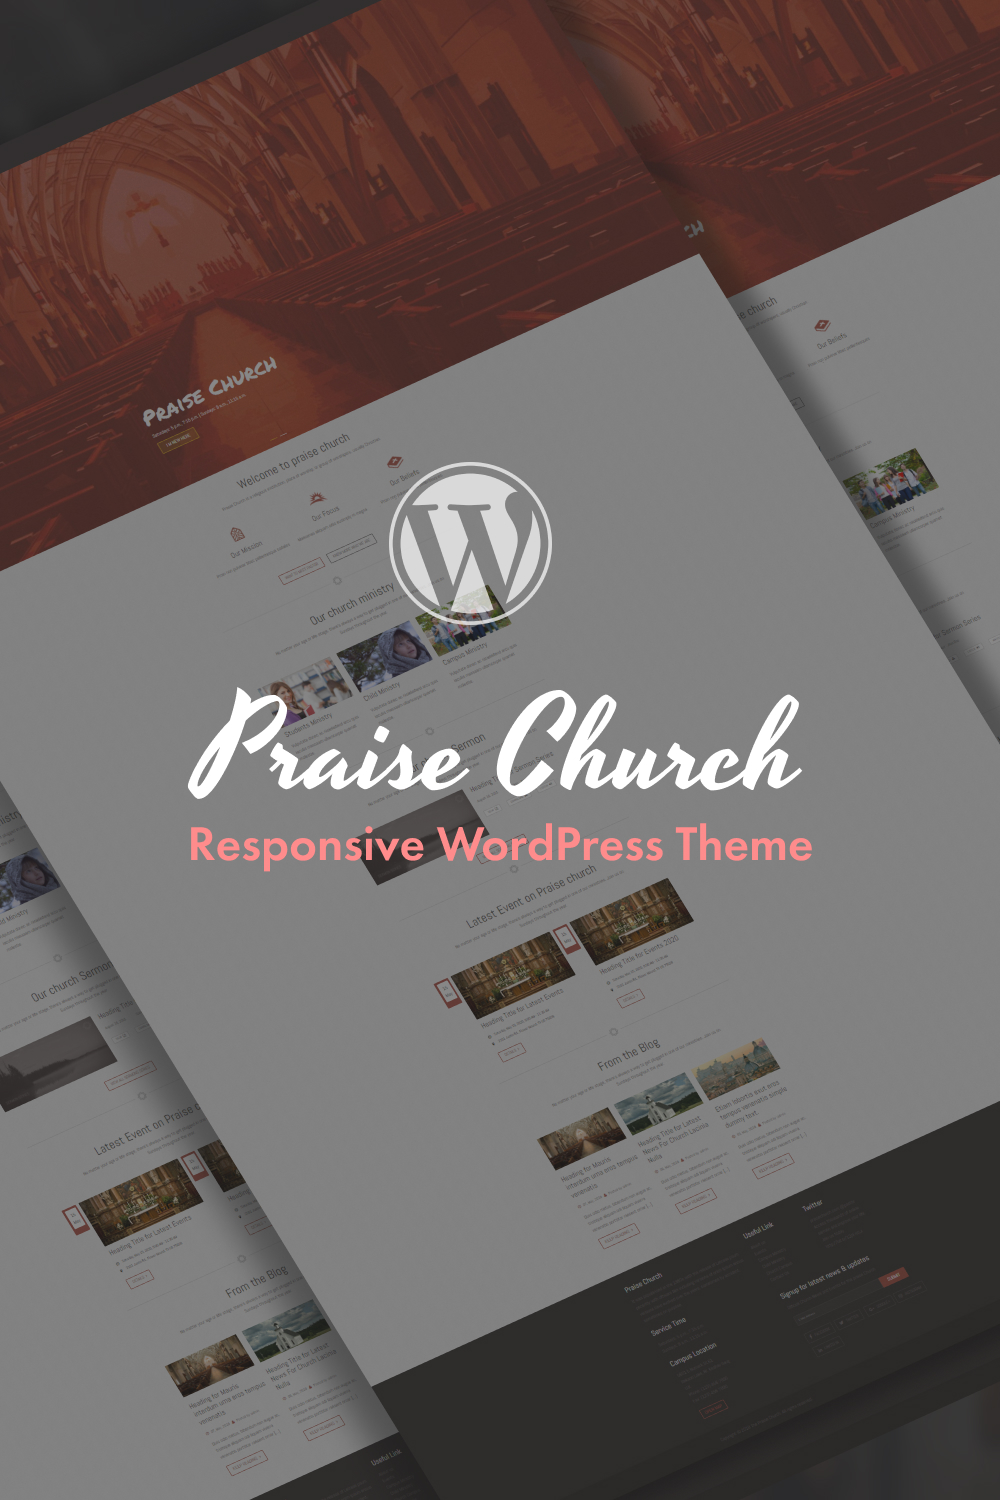 Pinterest of praise church responsive wordpress theme.